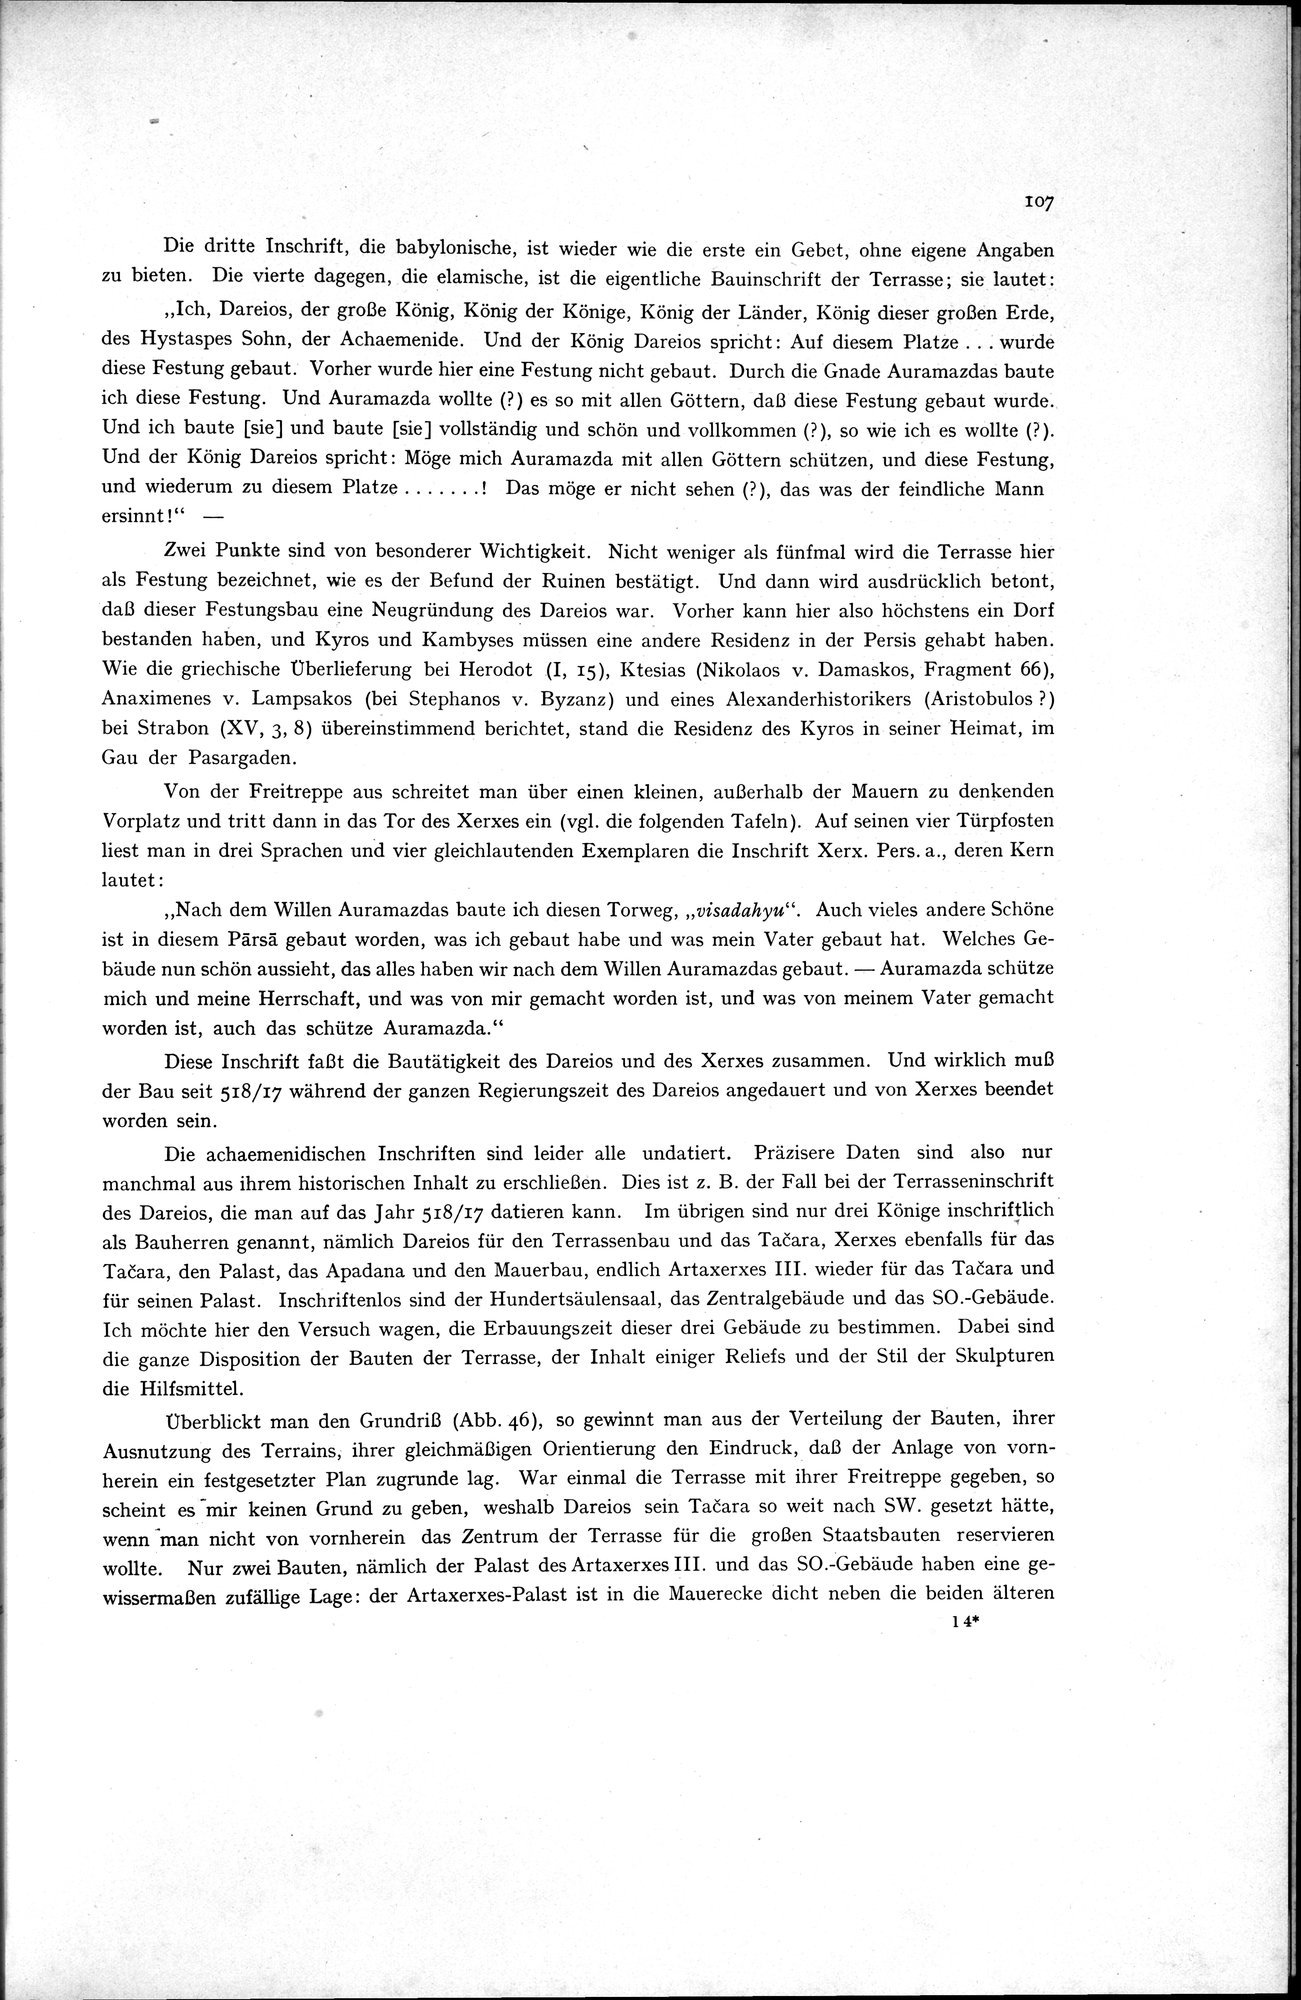 Iranische Felsreliefs : vol.1 / Page 119 (Grayscale High Resolution Image)